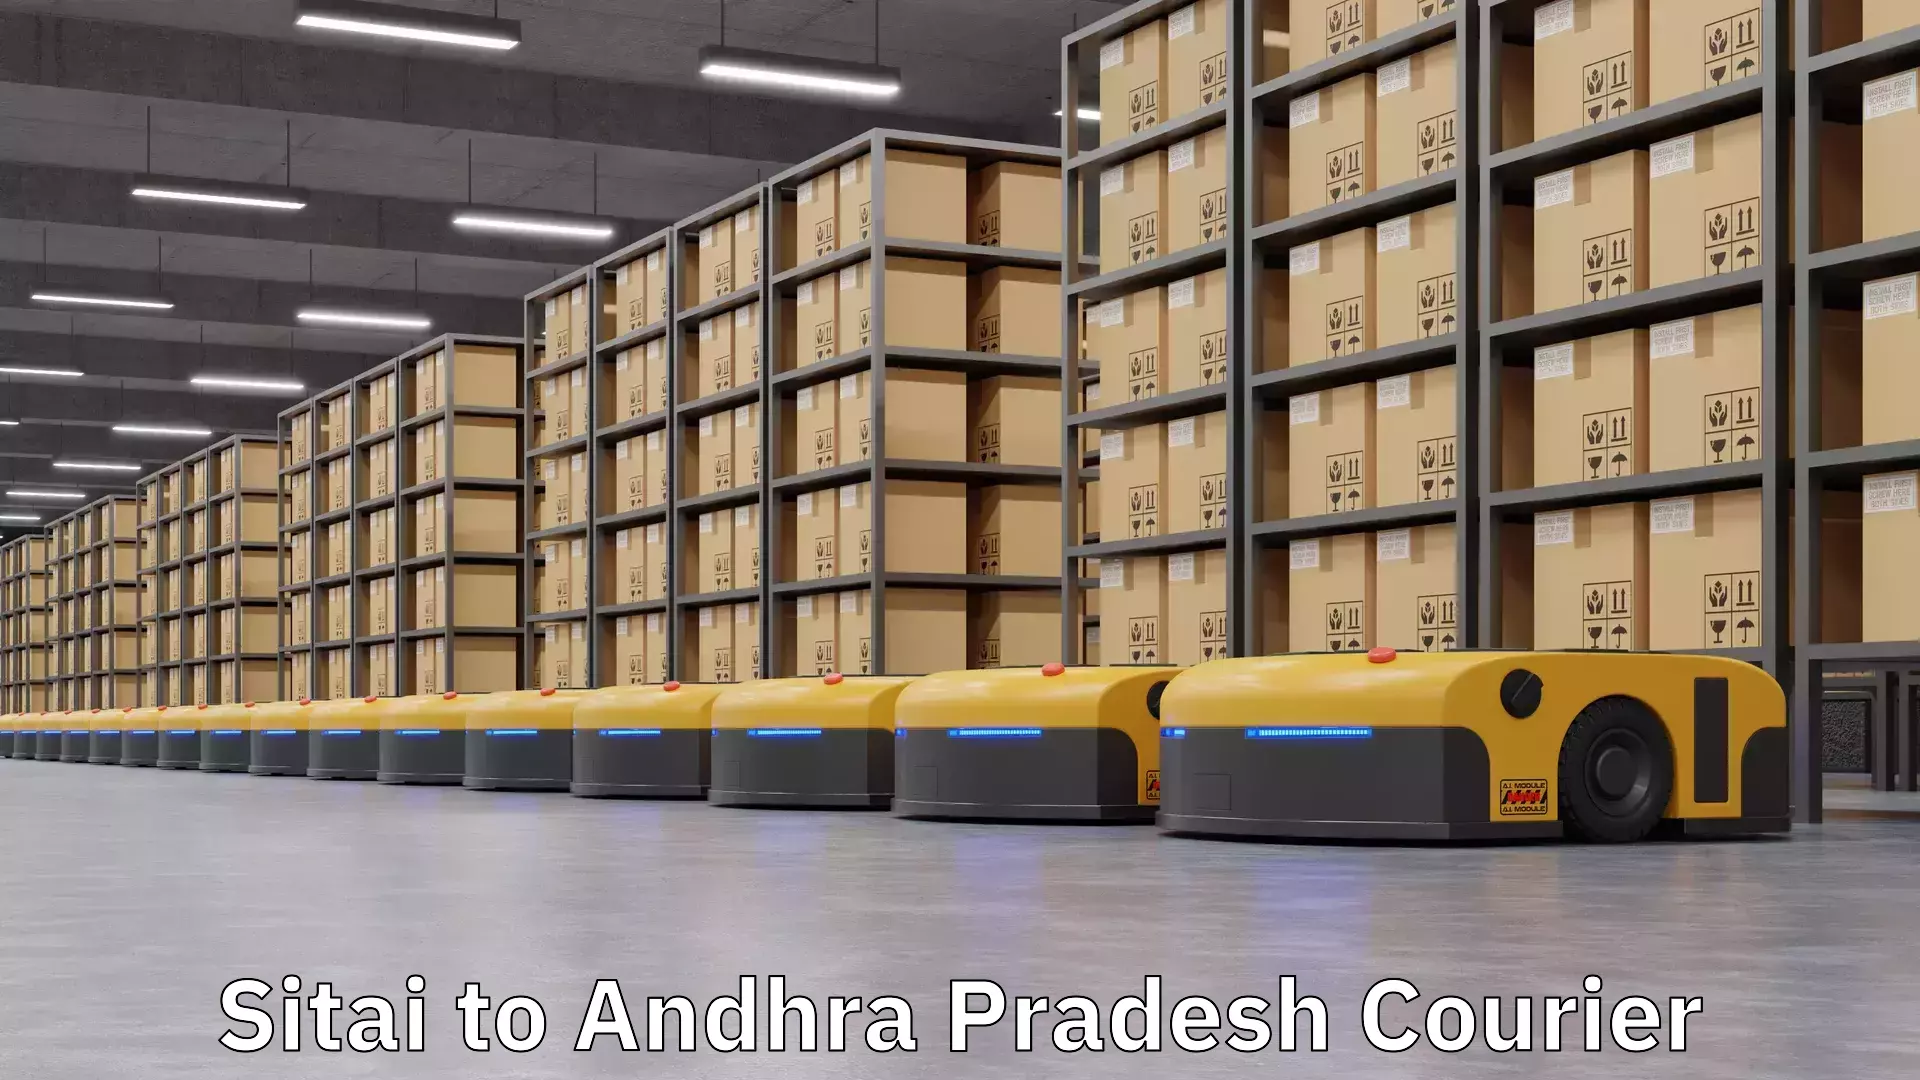 Express logistics providers Sitai to Andhra Pradesh